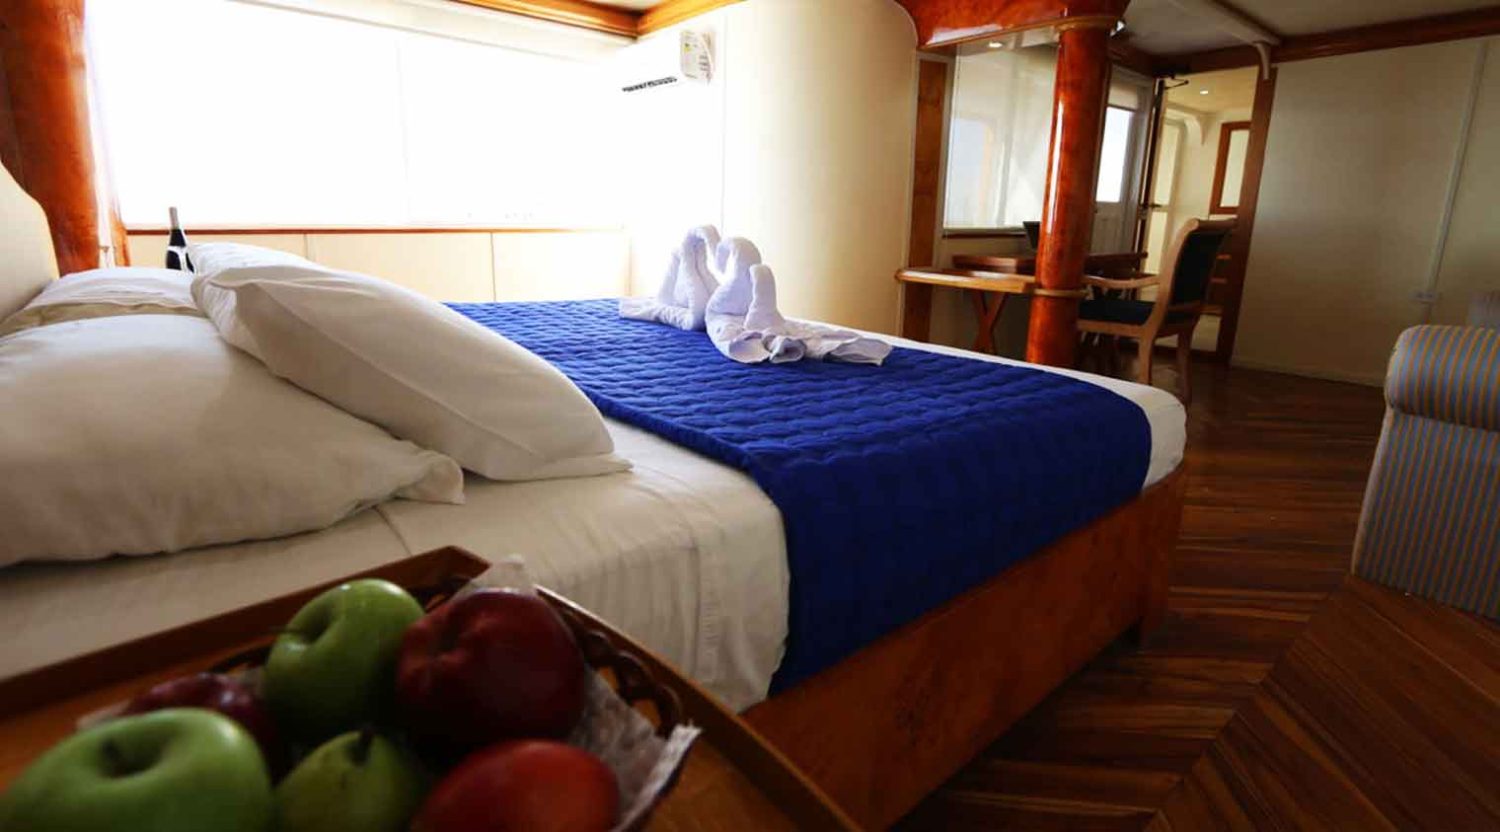 millenium catamaran yacht king size bed bedroom of galapagos islands tours 1